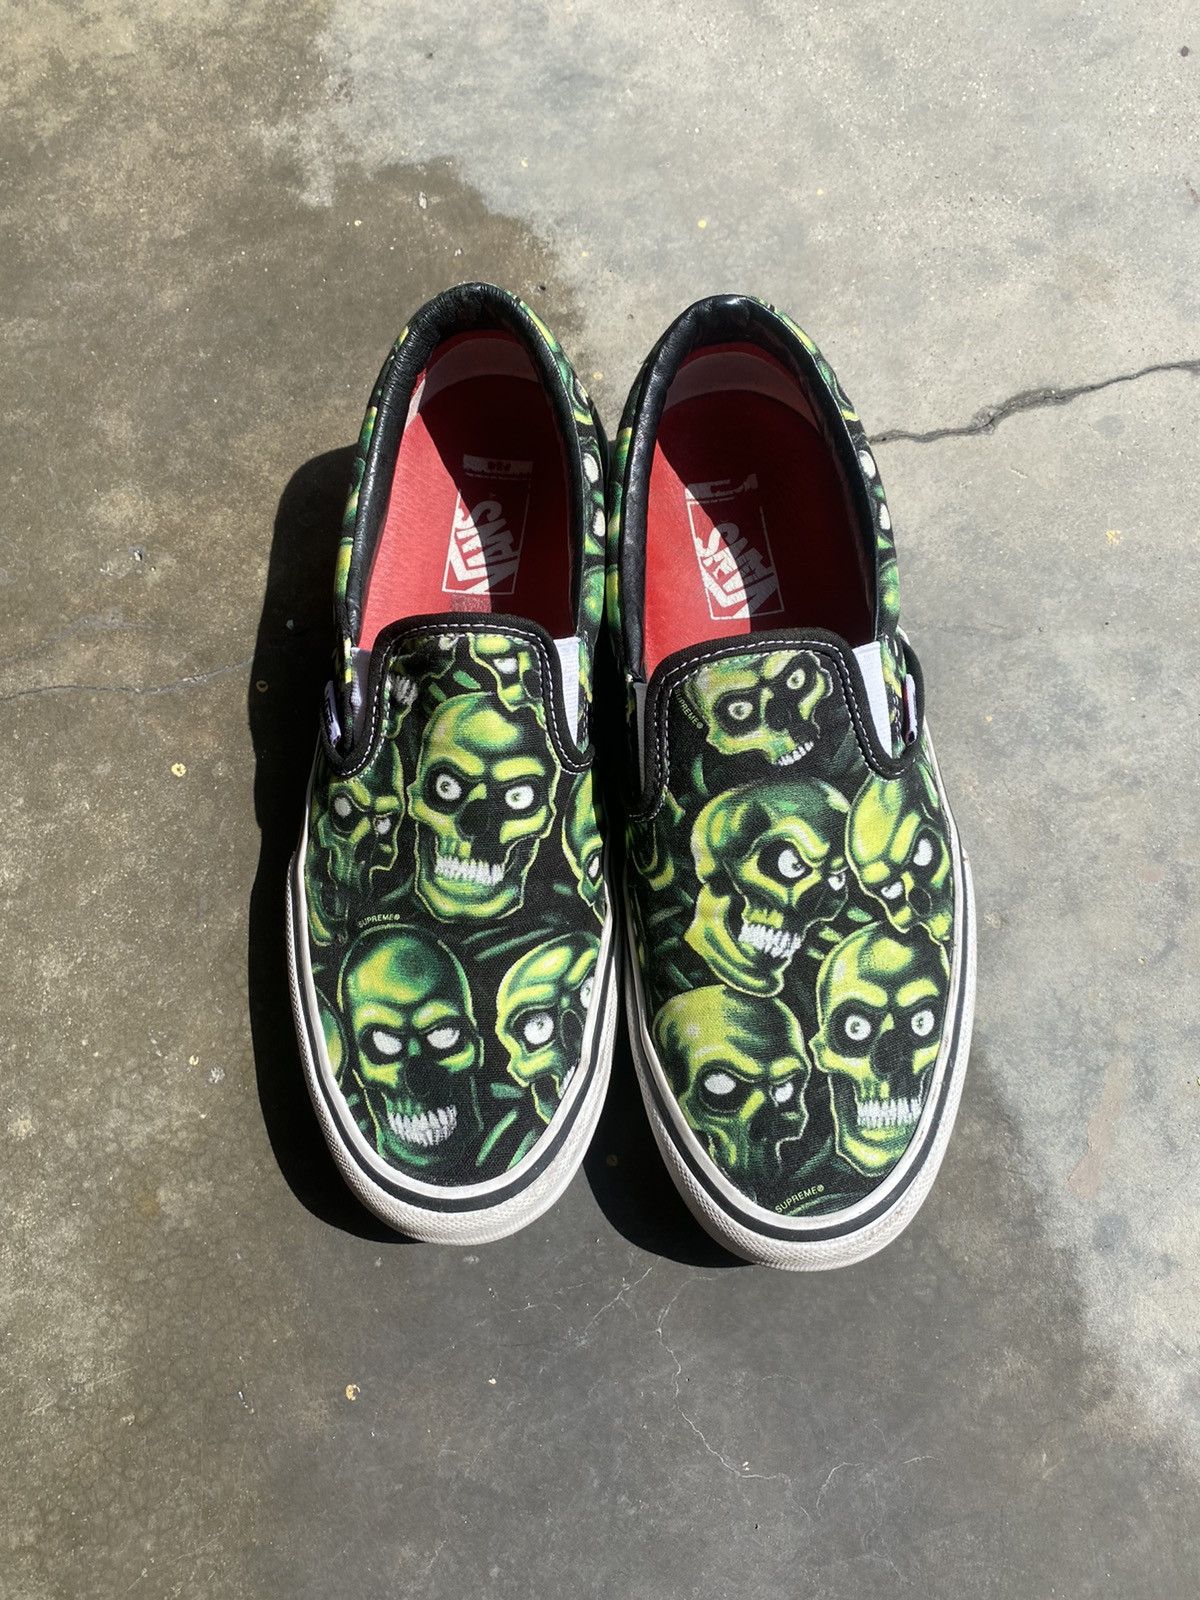 Supreme Supreme x Vans Green Skulls Slip Ons | Grailed